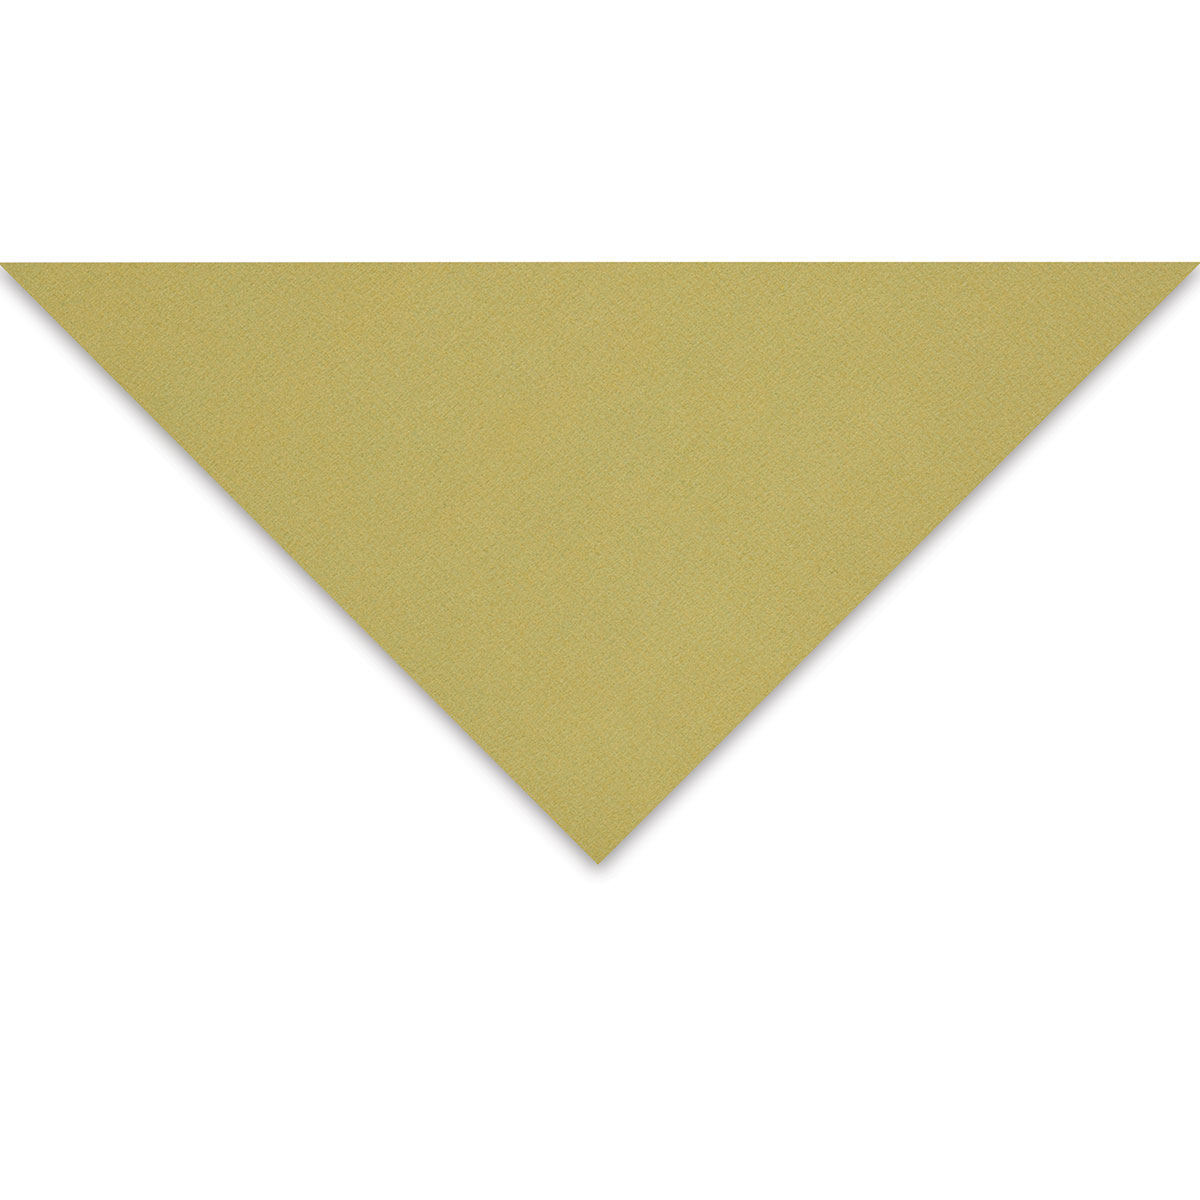 Strathmore 500 Charcoal Paper 19x25 - #141 Desert Sand, Pack of 25